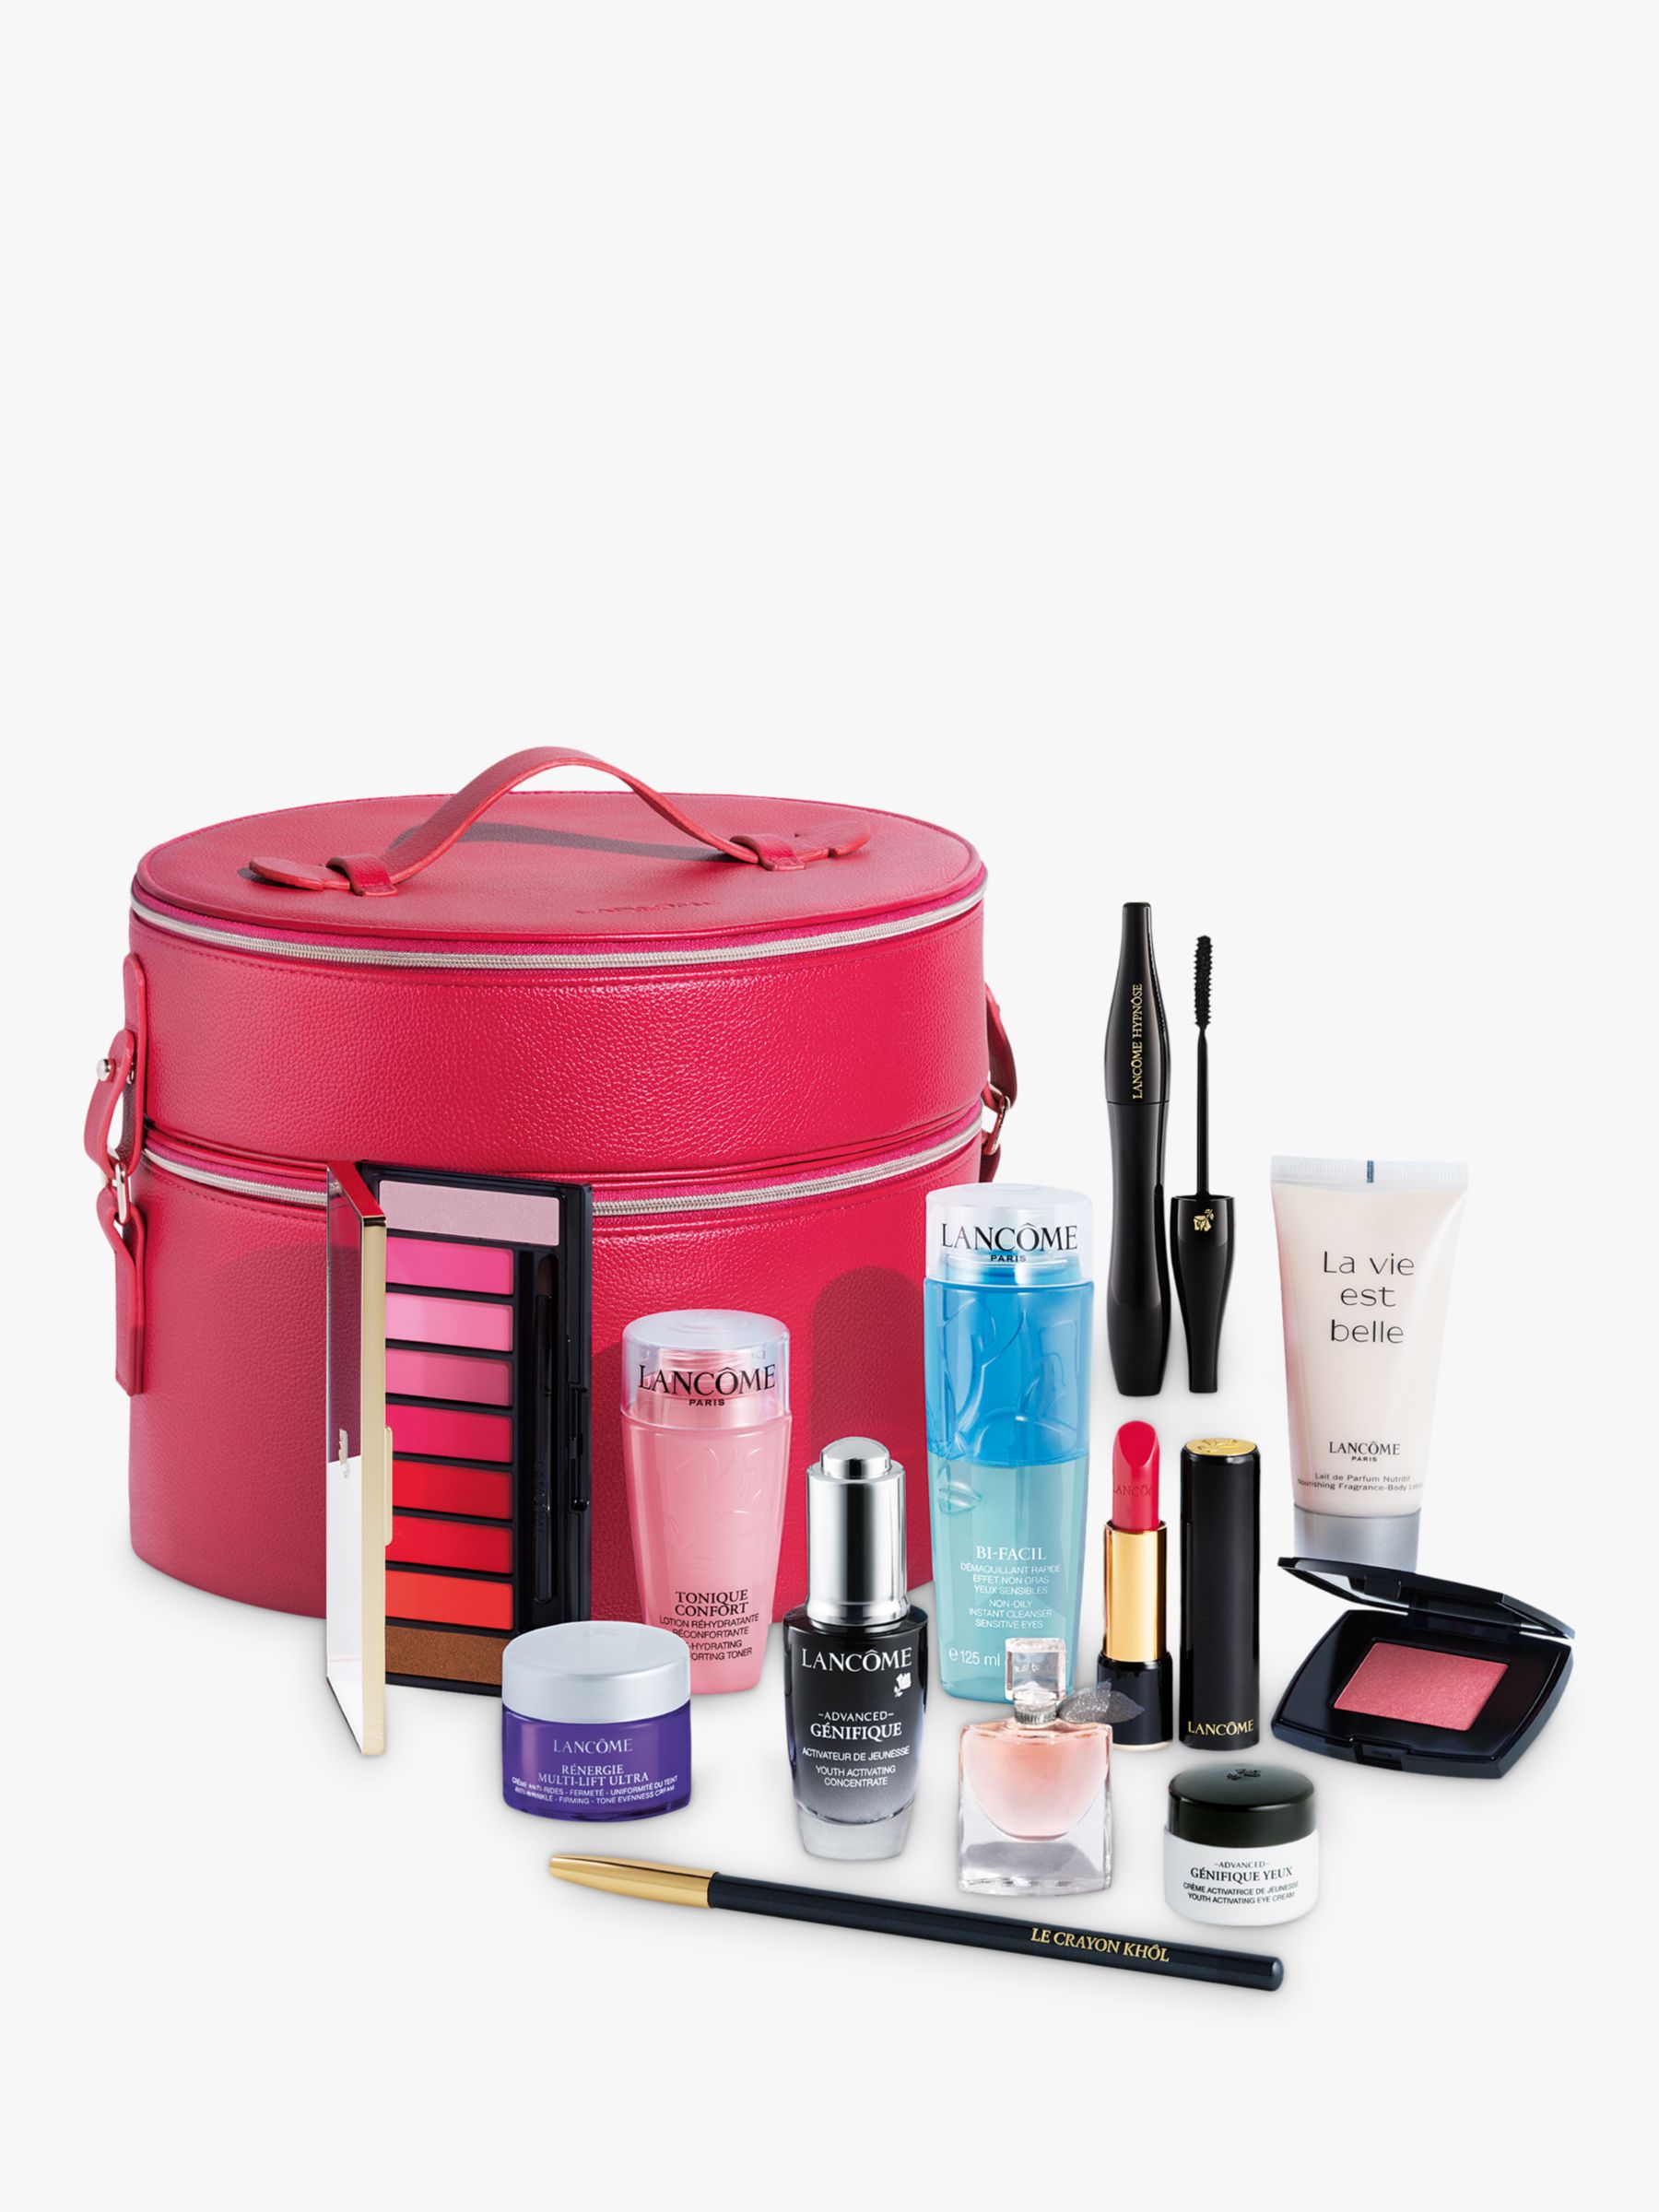 Lancôme Beauty Box Gift Set at John Lewis & Partners